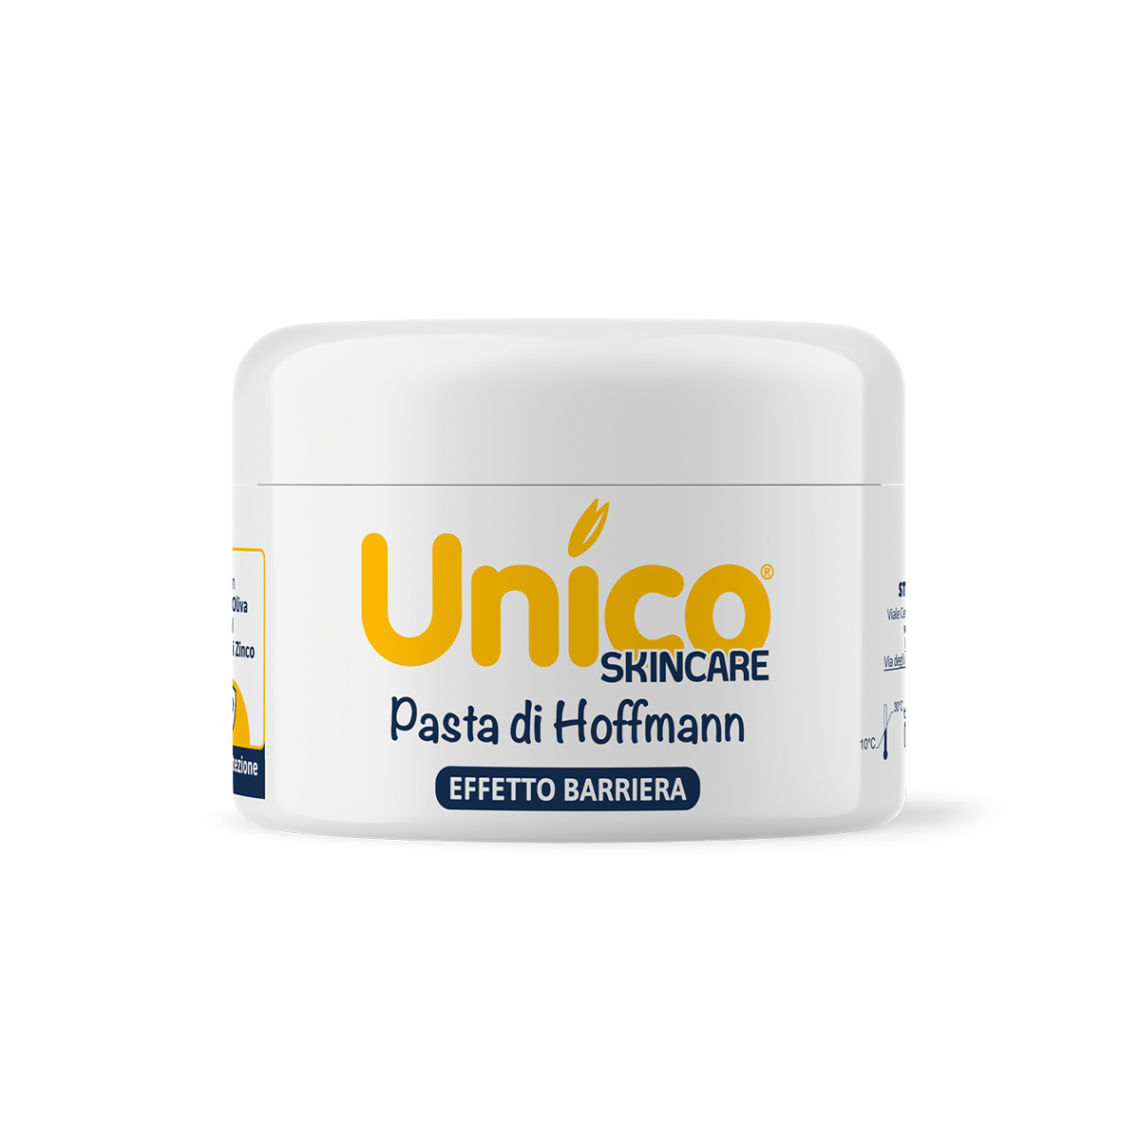 Unico Skincare Pasta di Hoffmann, Sterilfarma